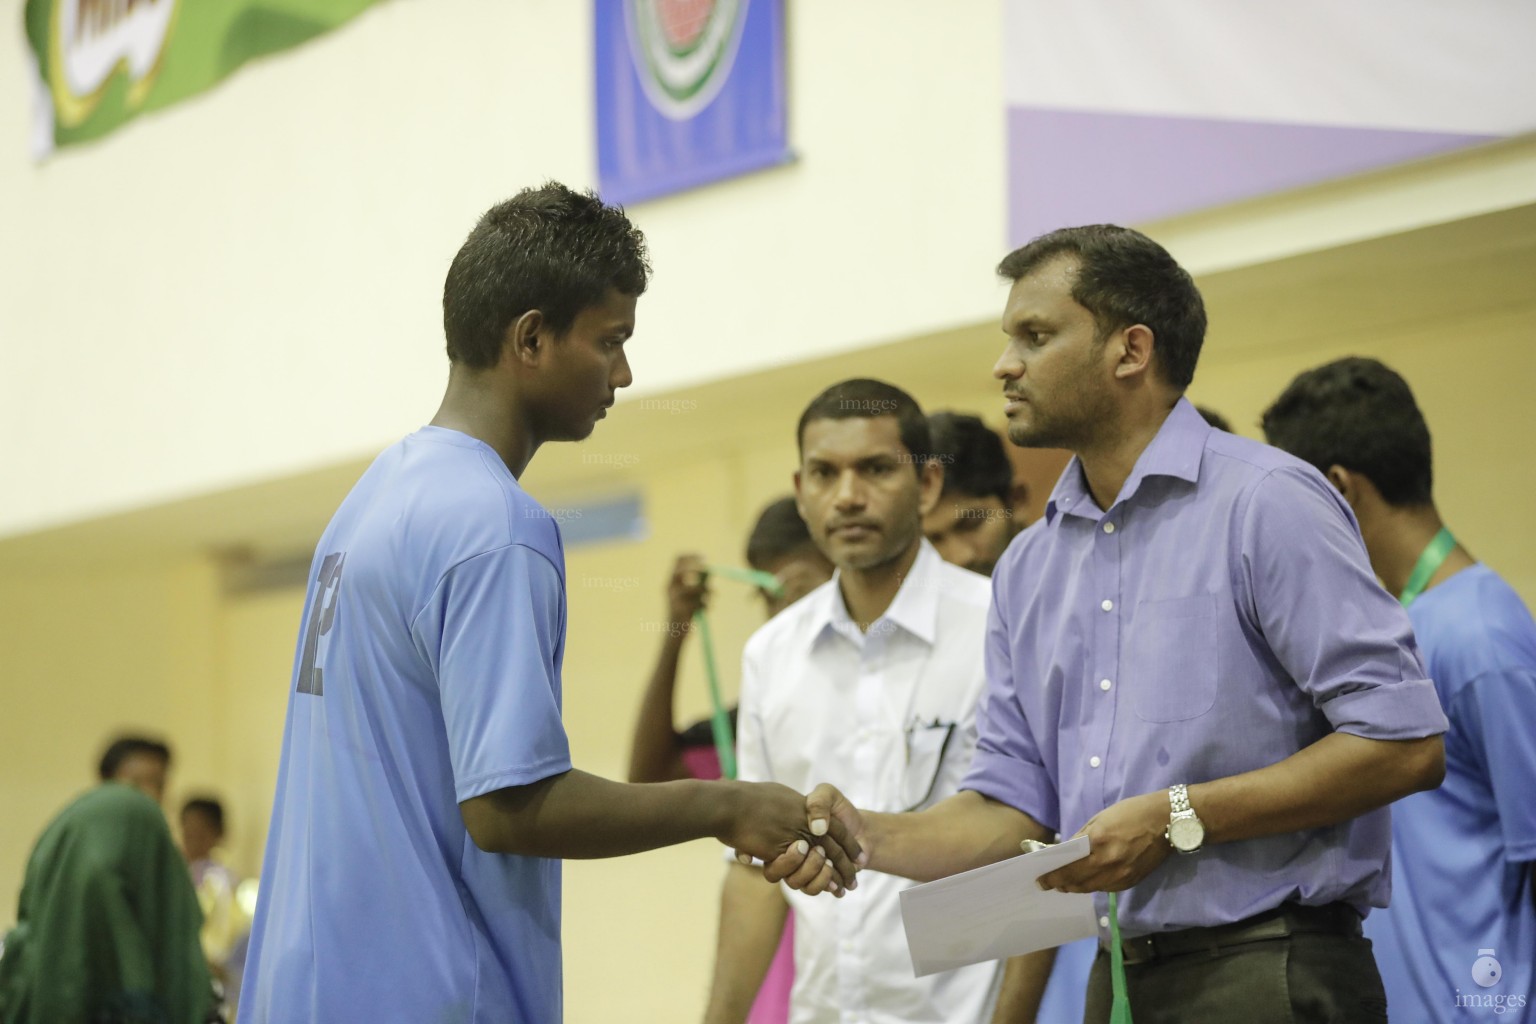 Inter college / university volleyball tournament Under 19 boys final
Villa Int High School VS Faafu Atholhu Madharusa  - Male , Maldives. 14th MARCH 2017 (Images.mv Photo: Mohamed Ahsan)